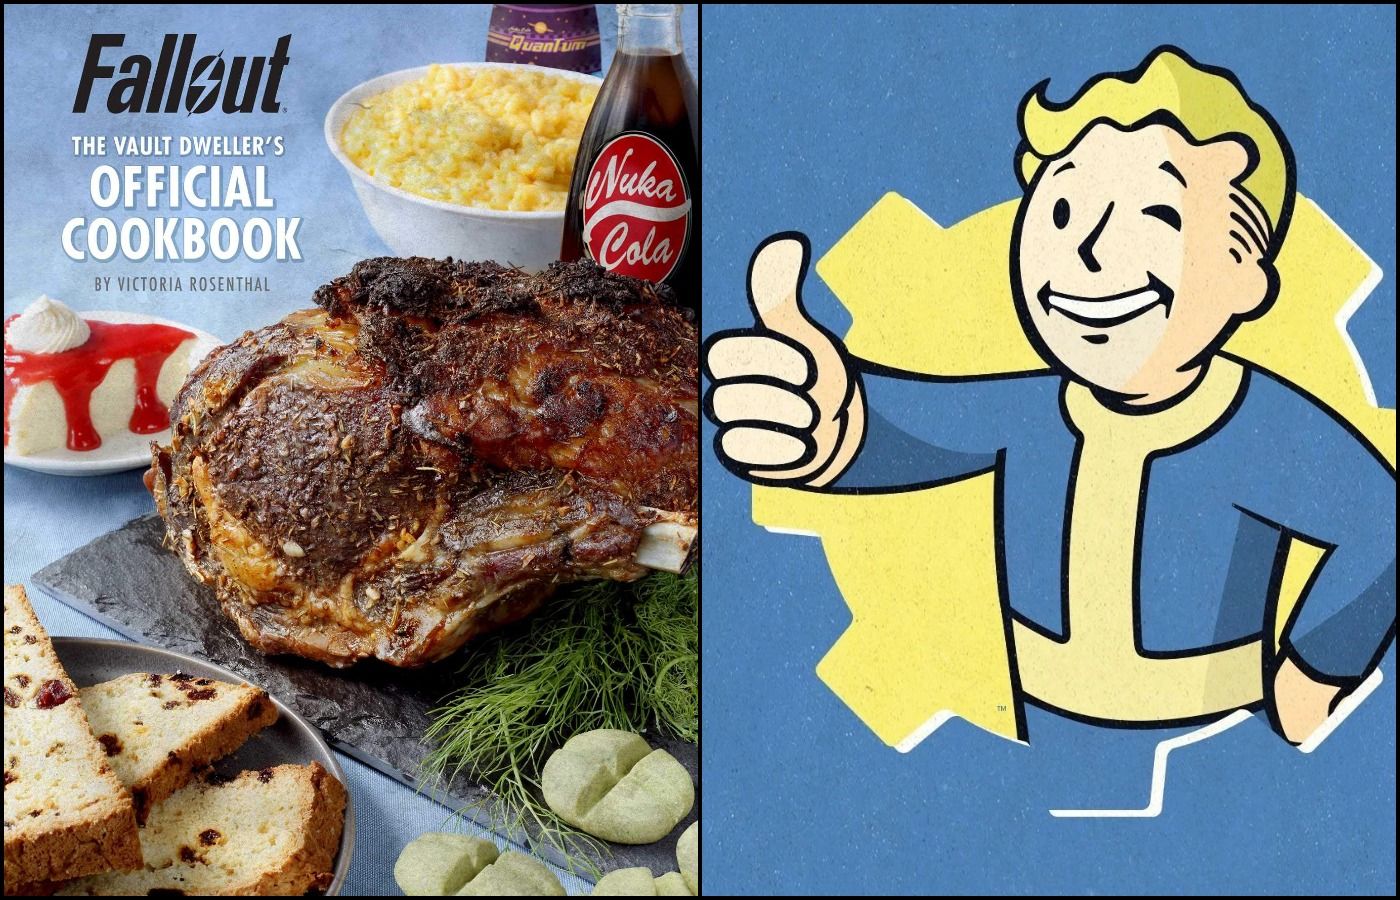 Fallout Cookbook